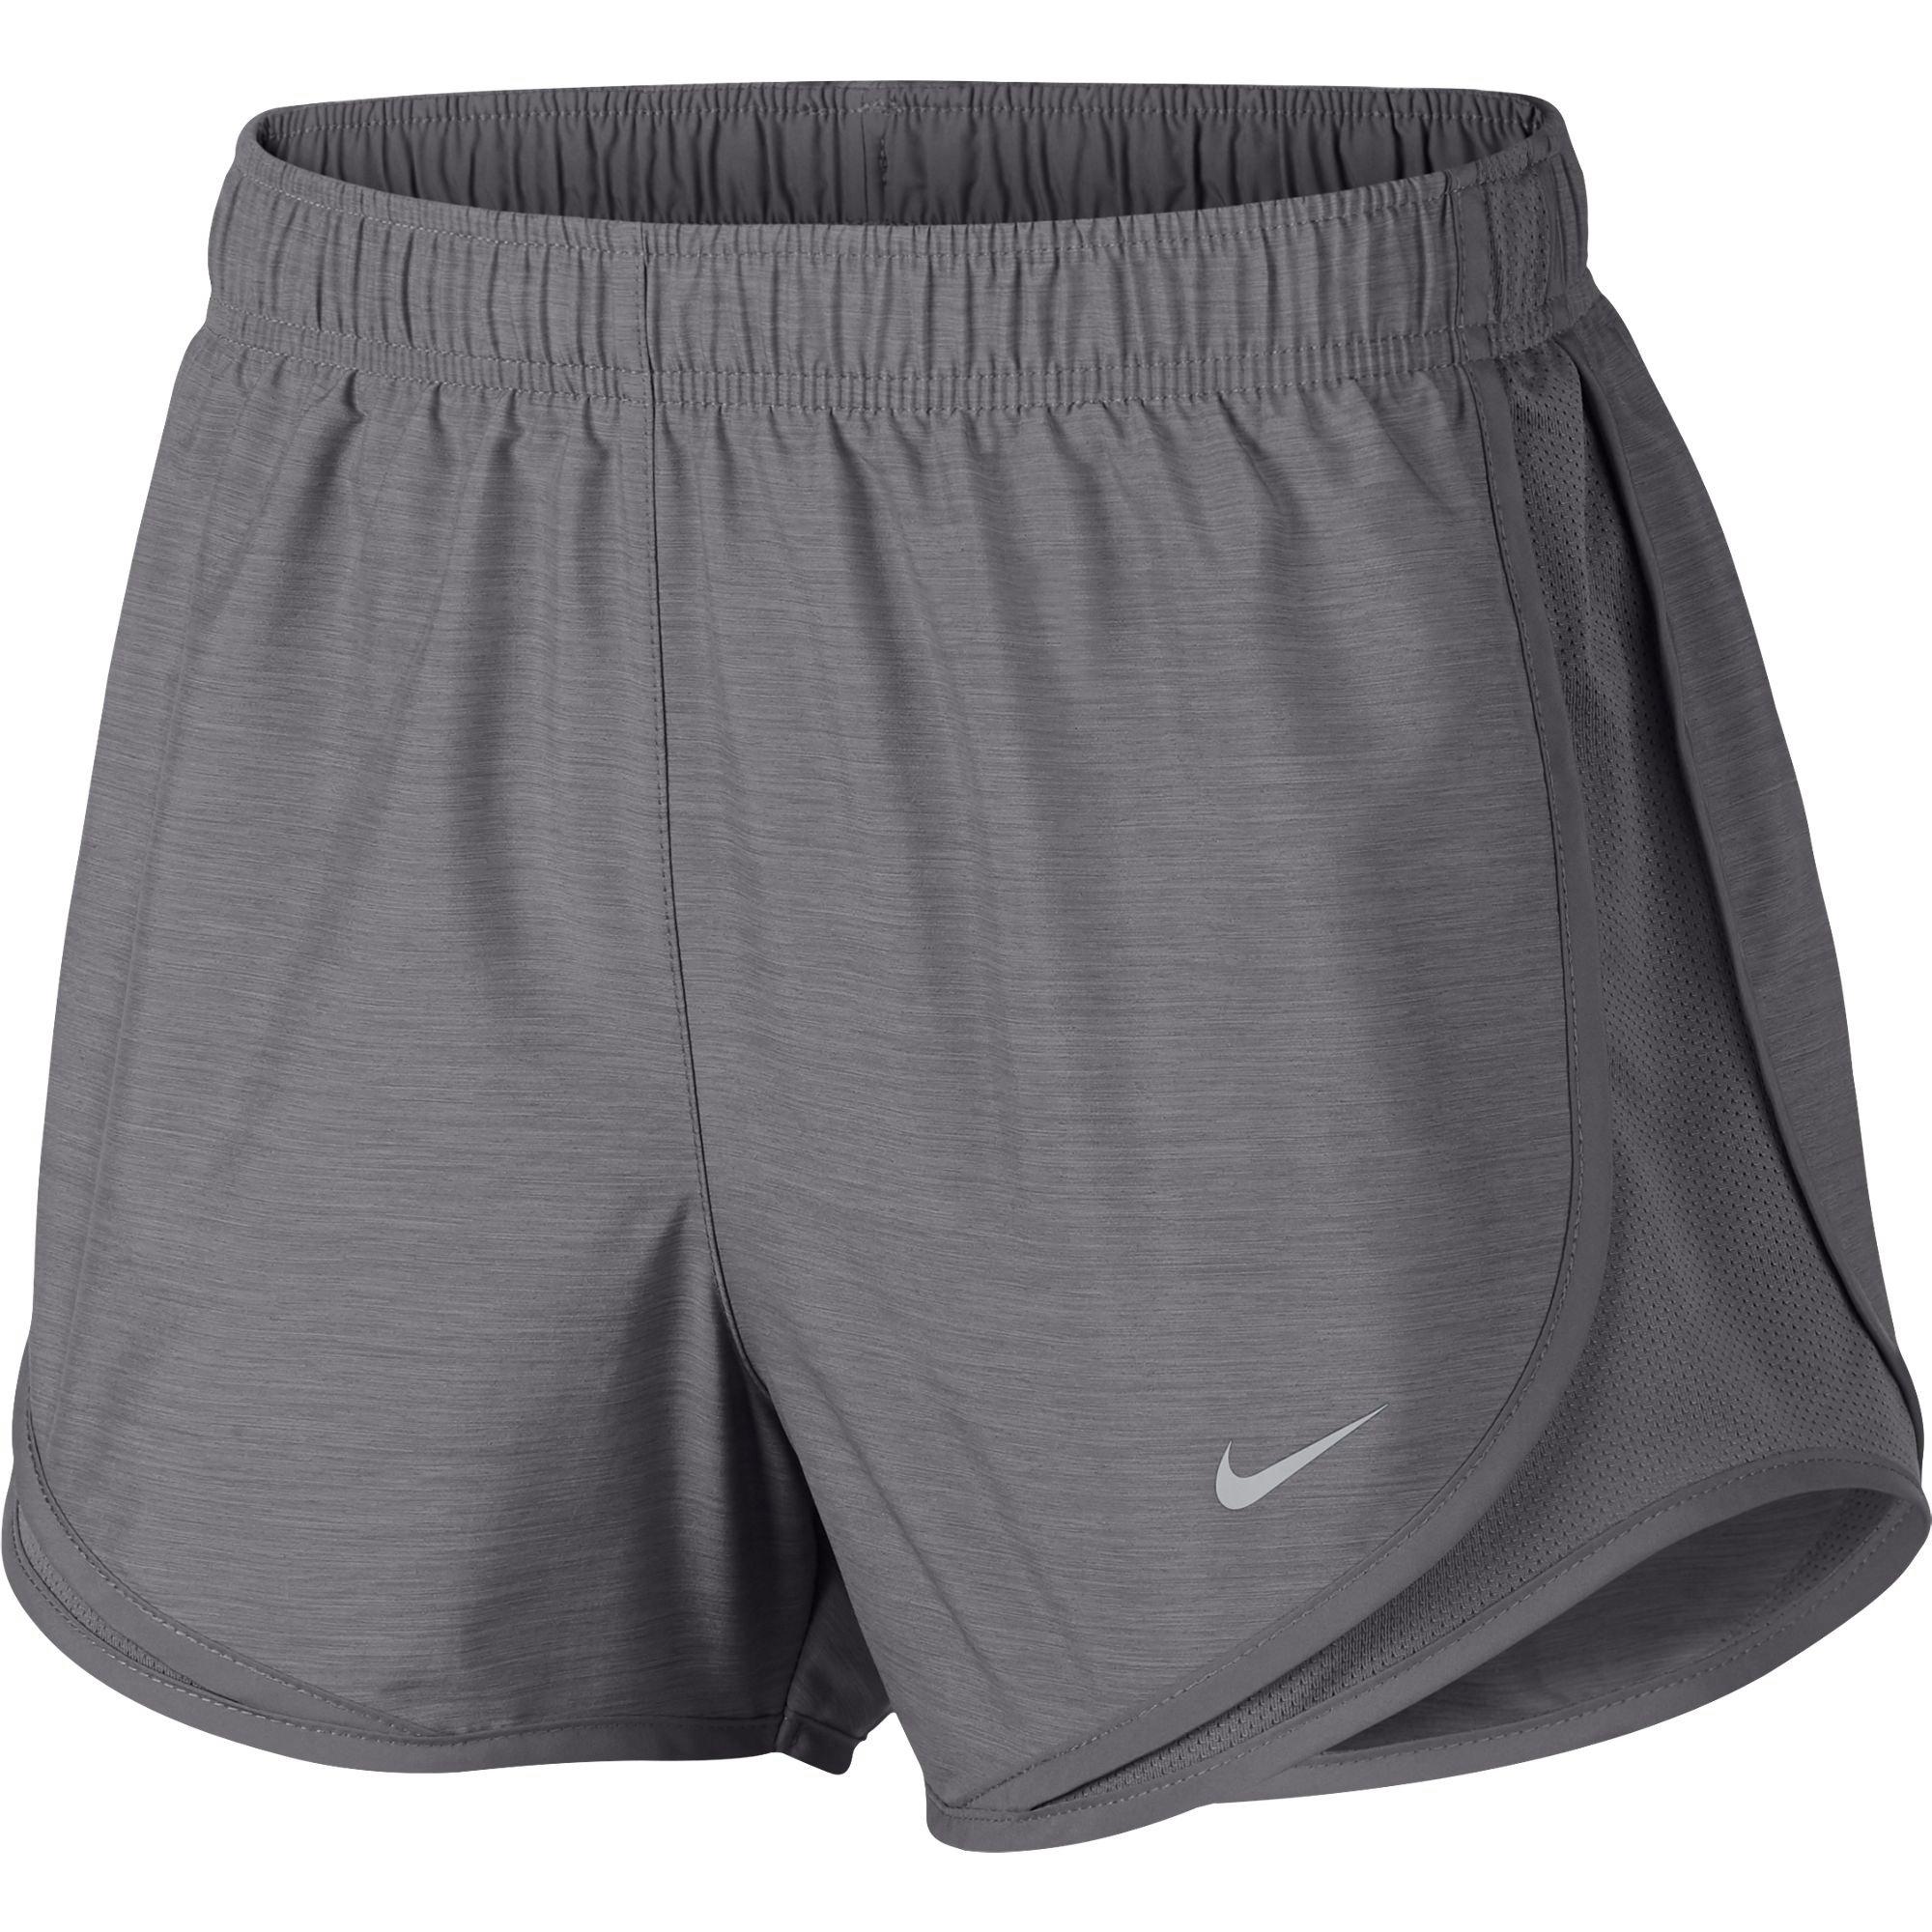 grey nike running shorts women's